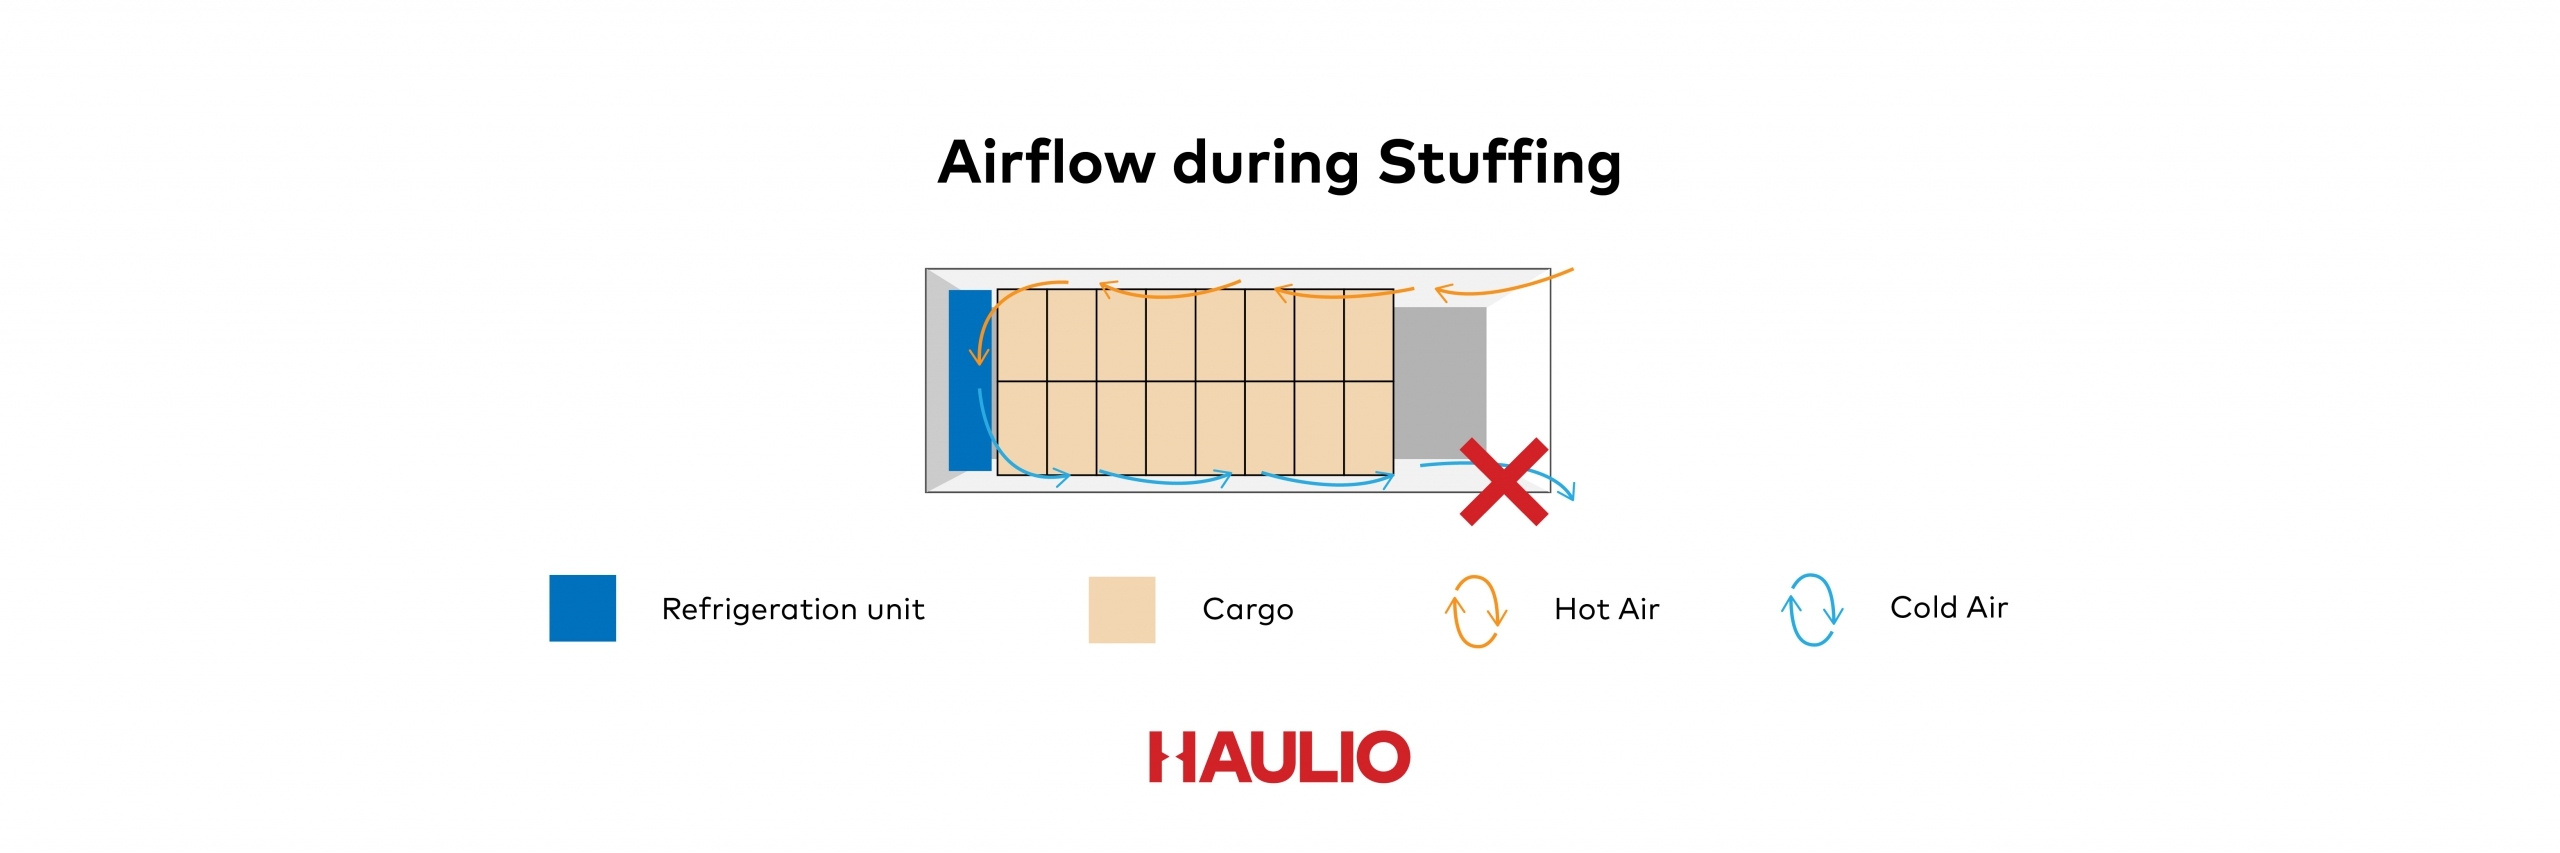 Reefer Airflow during Stuffing